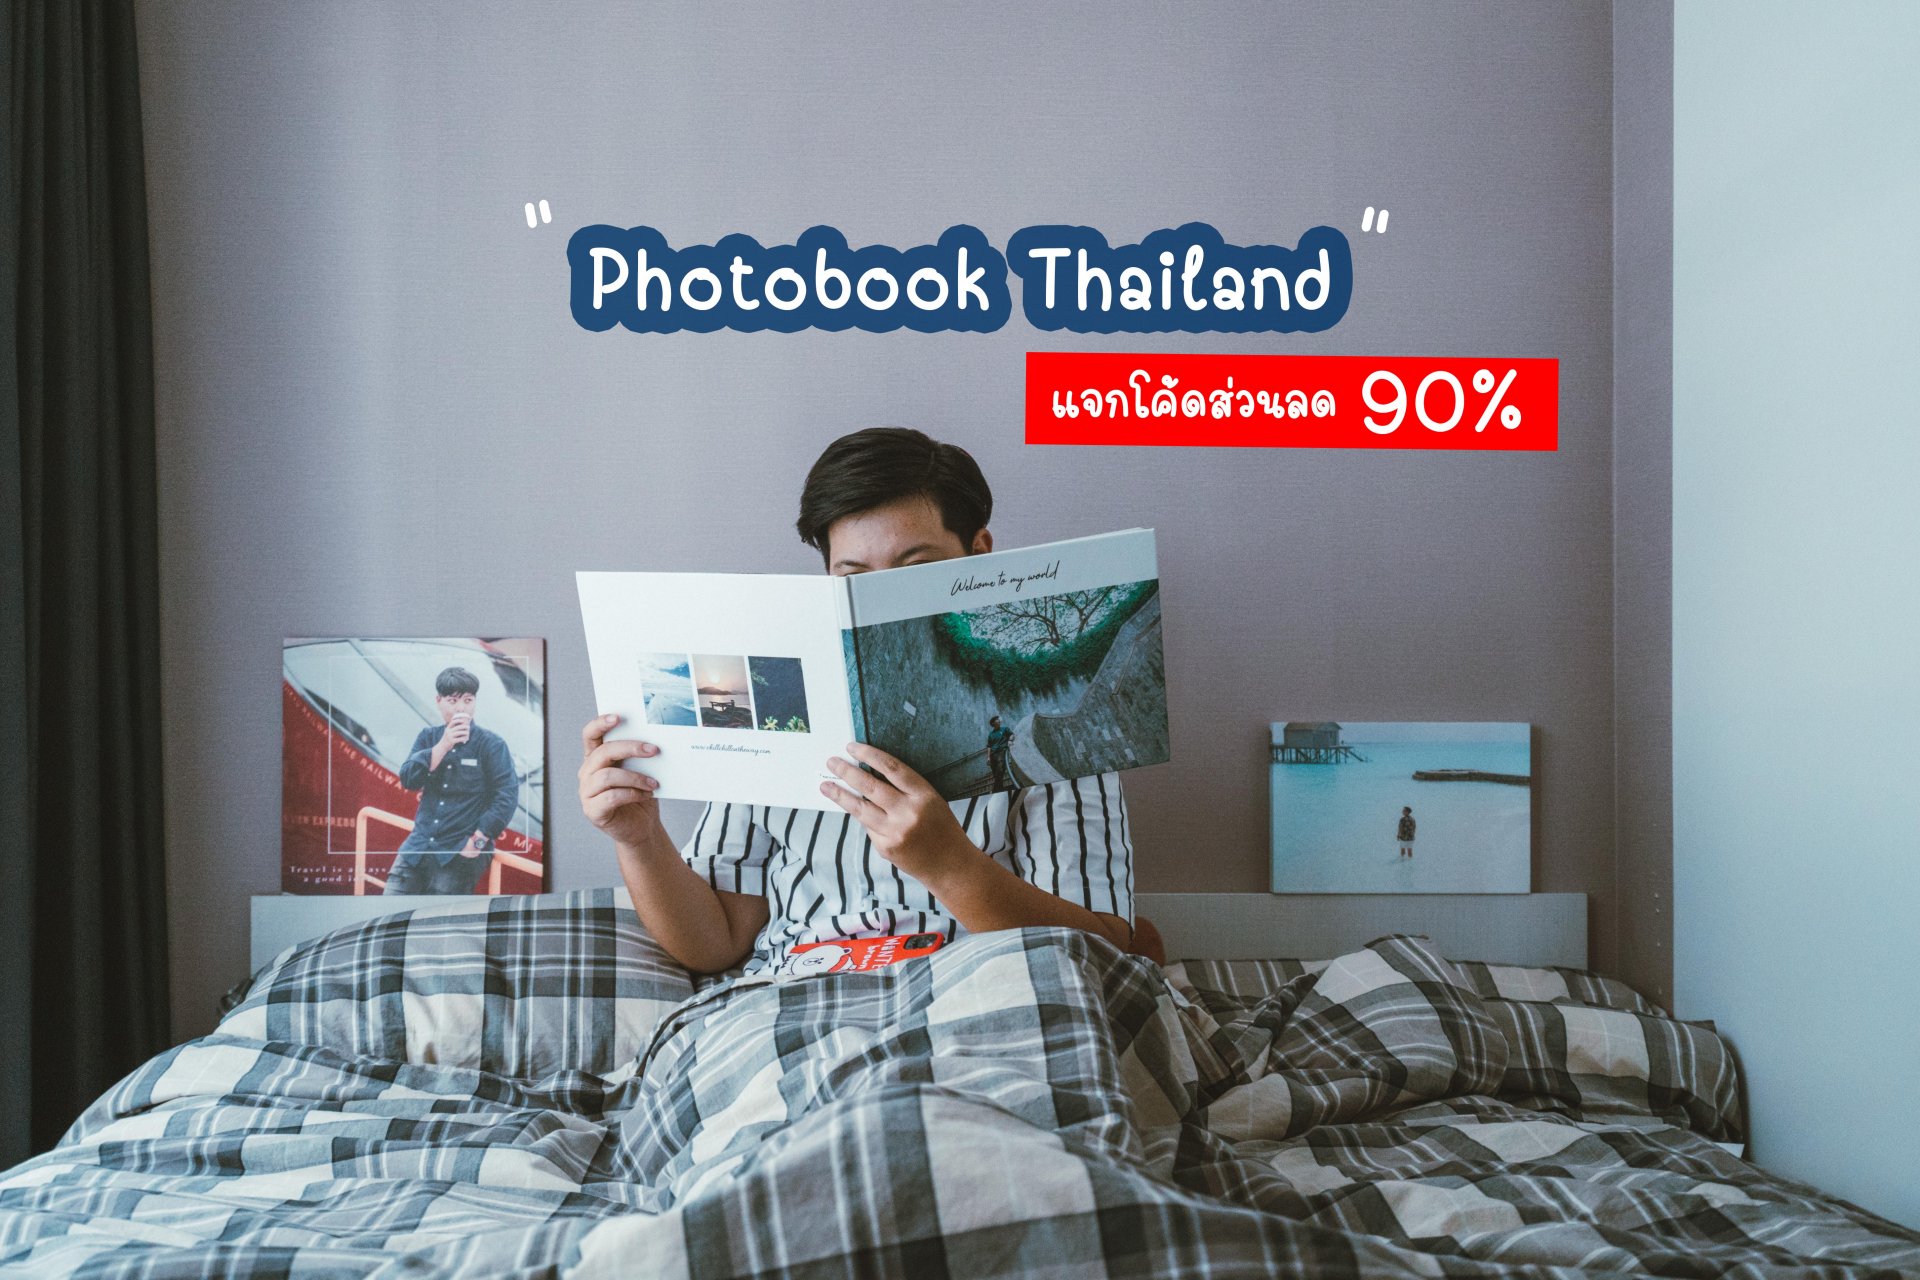 Photobook Thailand ลดหนักจัดเต็มแจกโค้ดส่วนลด 90%  Standard Canvas เหลือ 120 บ. เท่านั้น!!!!!!!